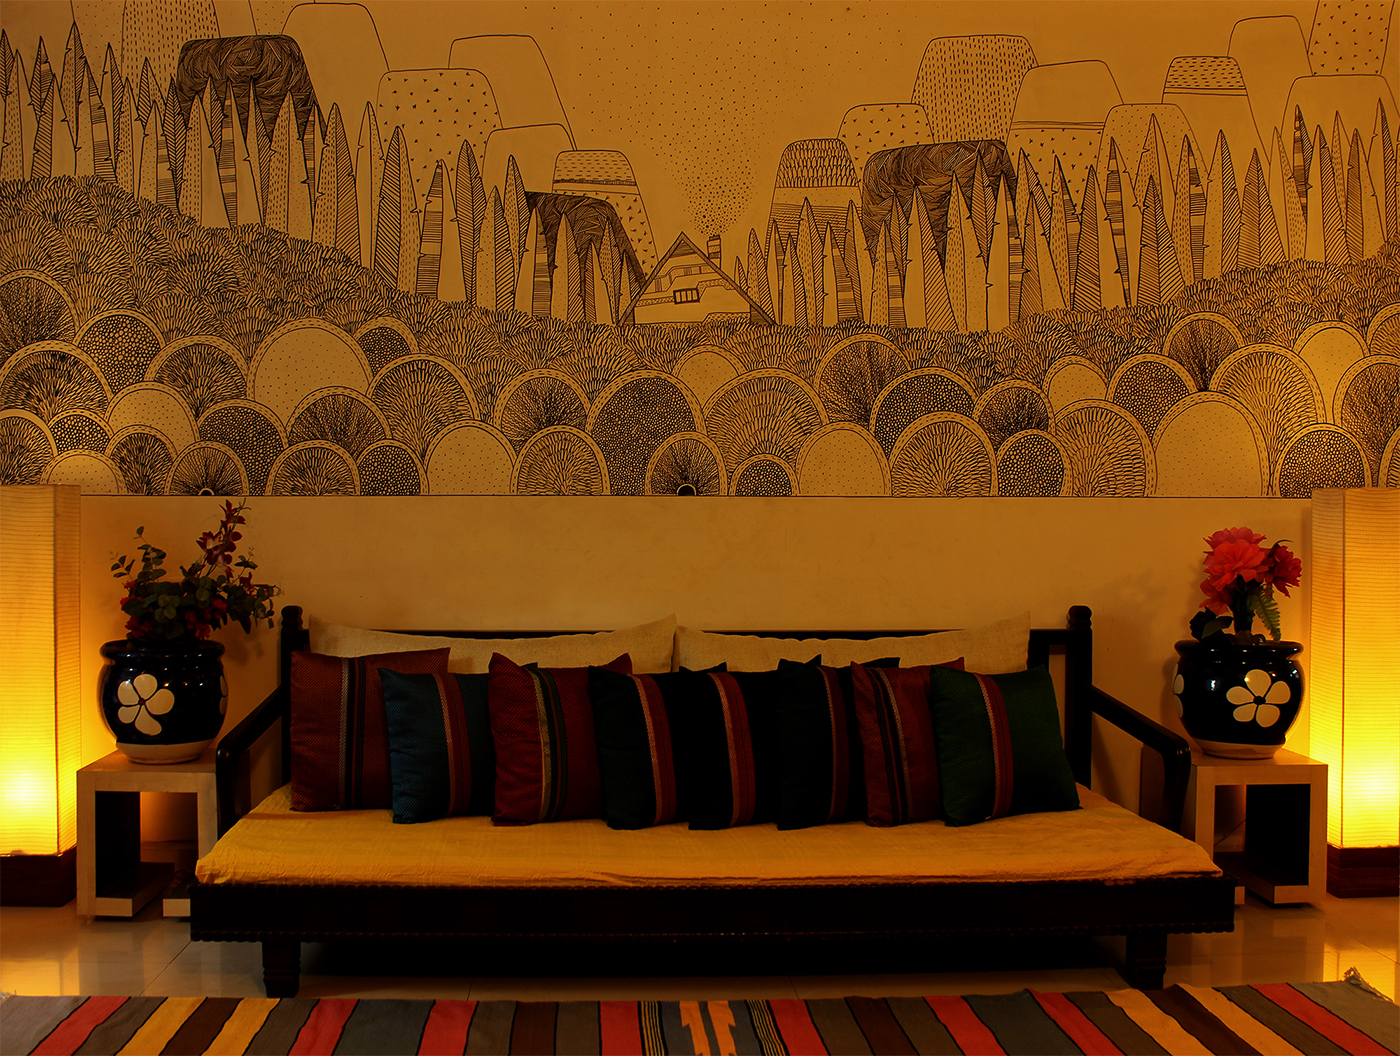 #doodle #wallart #art #house #markerpens #livingroom #interior #scenery #warm #drawing